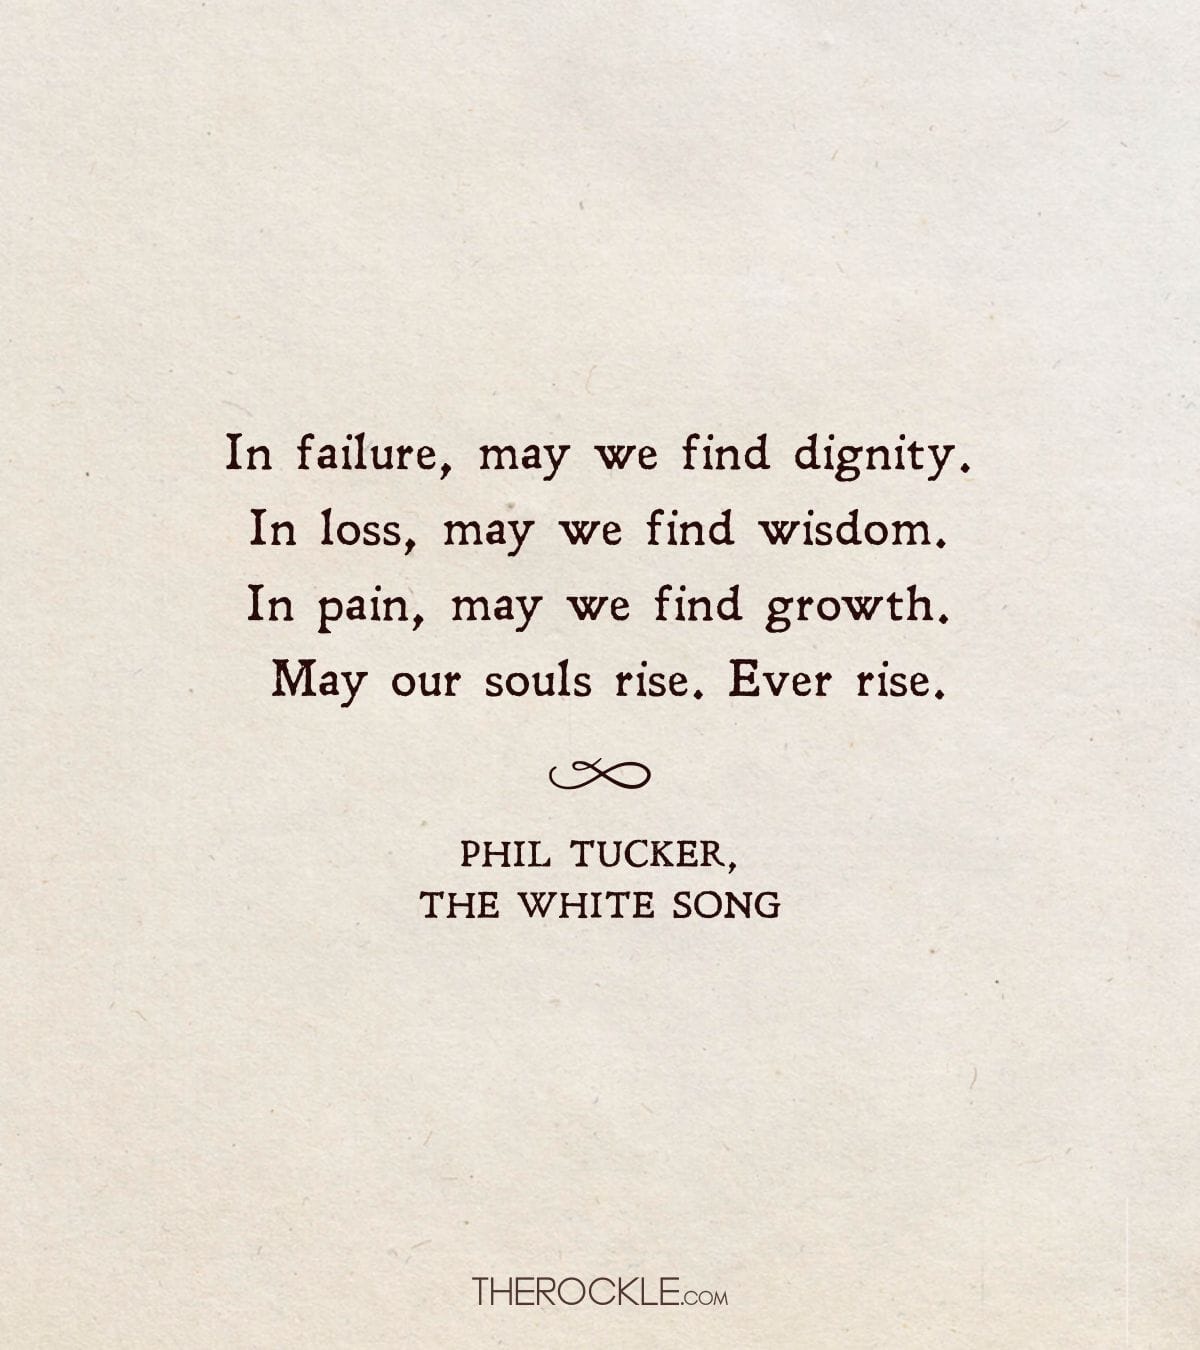 Phil Tucker on overcoming adversity